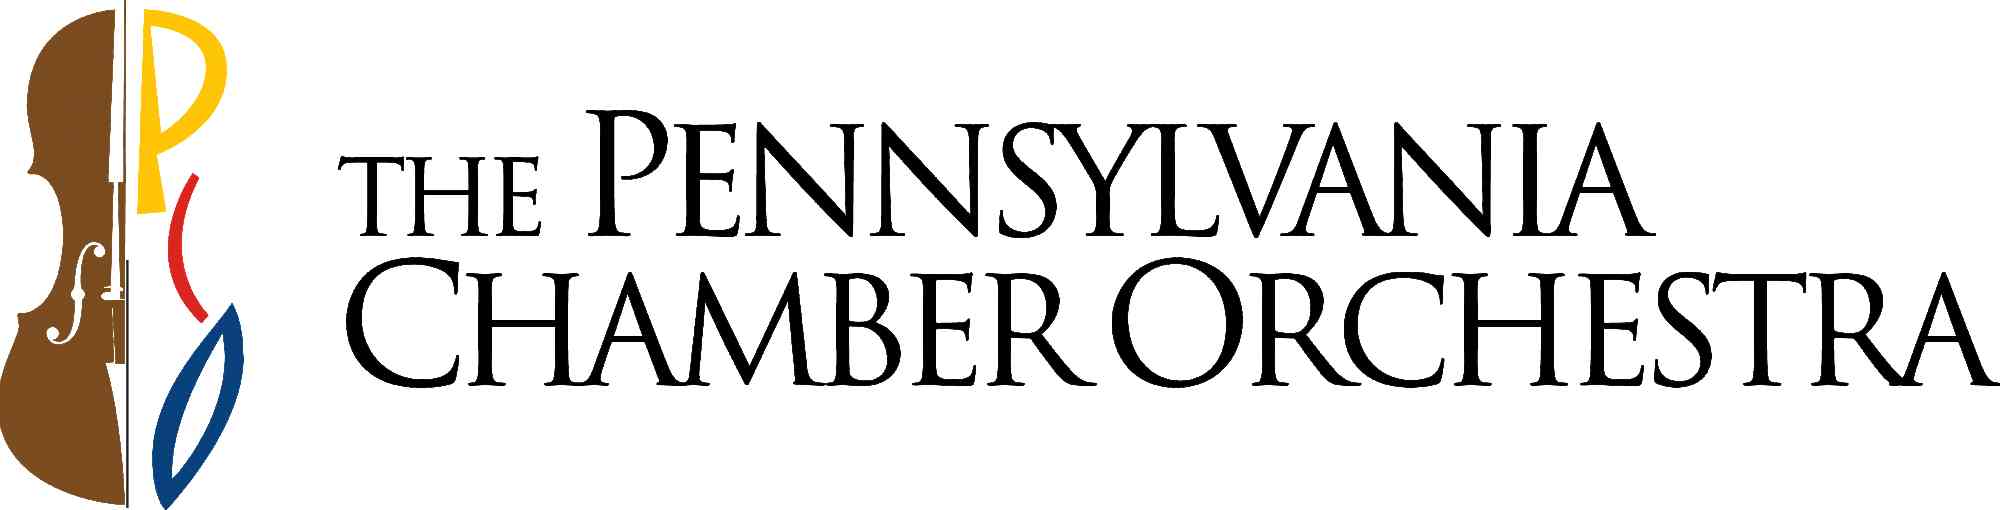 Pennsylvania Chamber Orchestra Logo Black